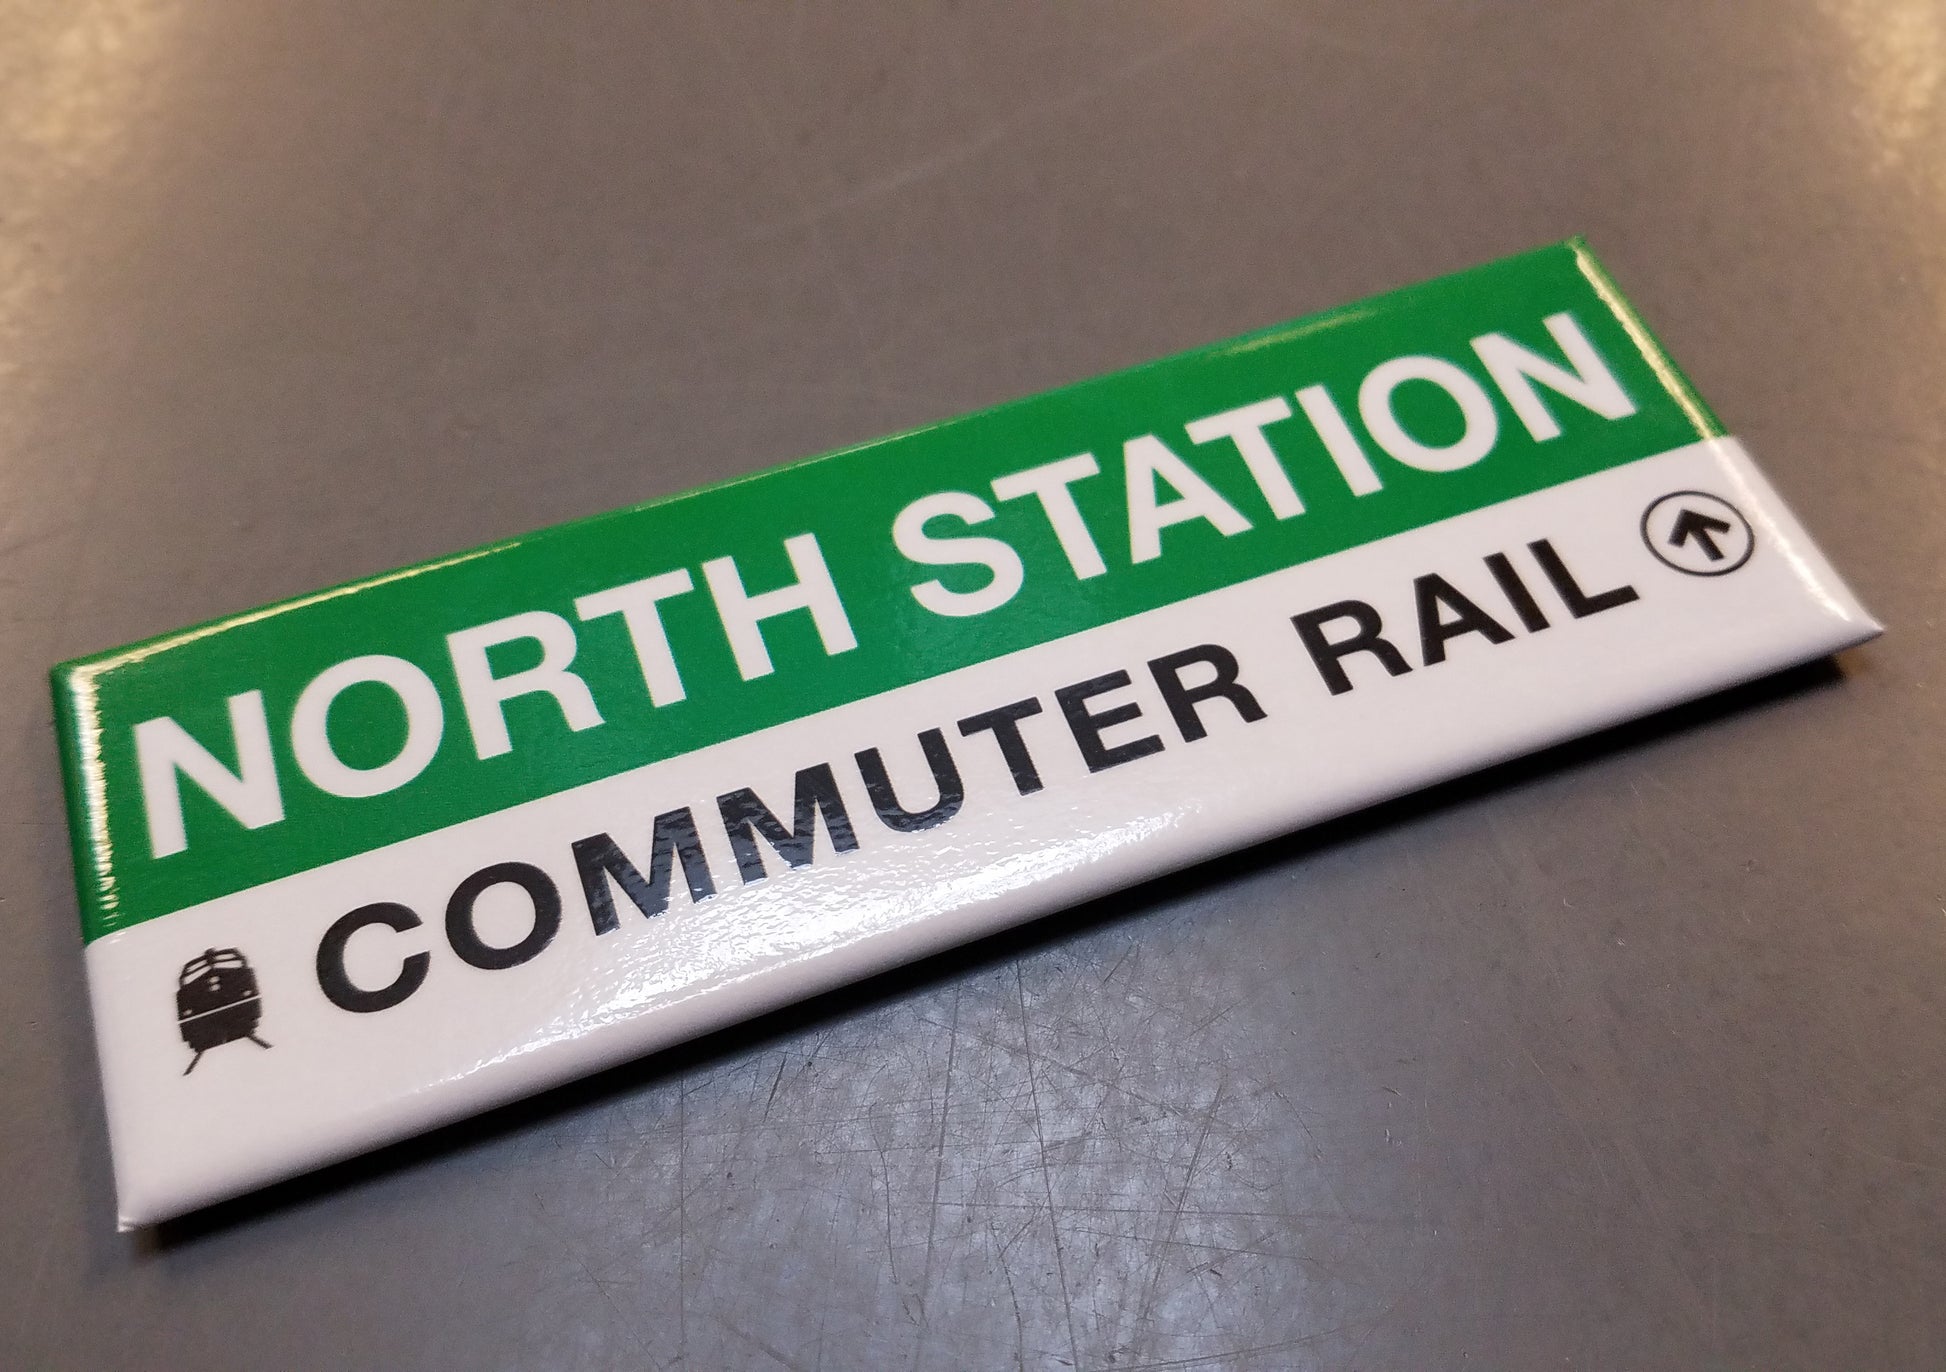 Green Line Station Magnet: North Station; Commuter Rail